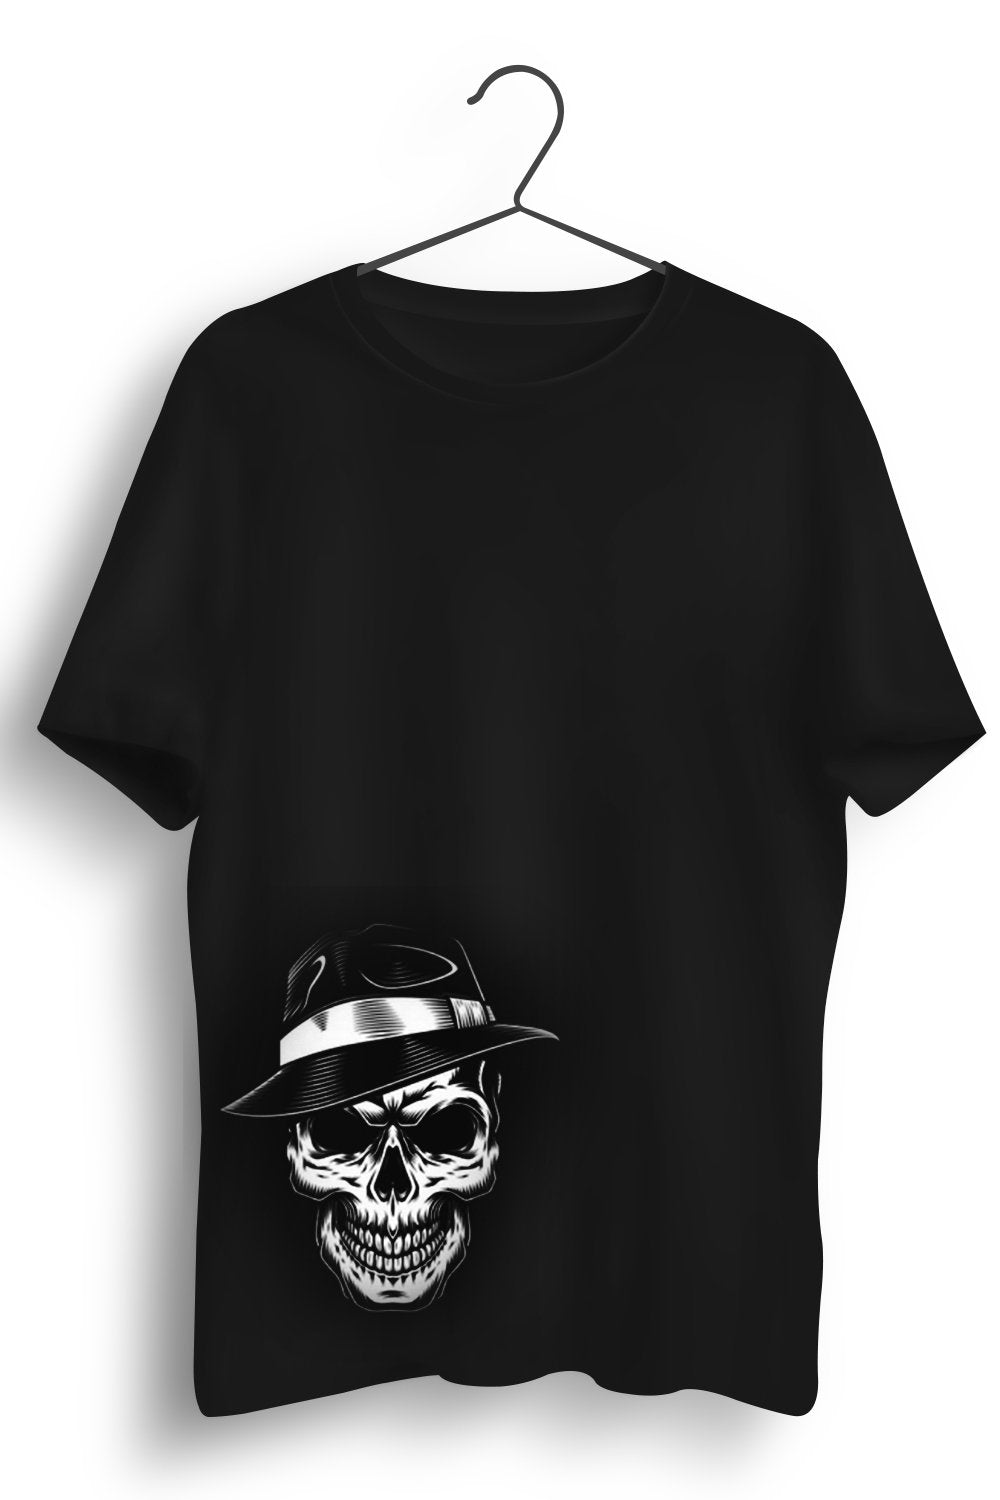 Skull Gangster Asymmetric Printed Black Tshirt